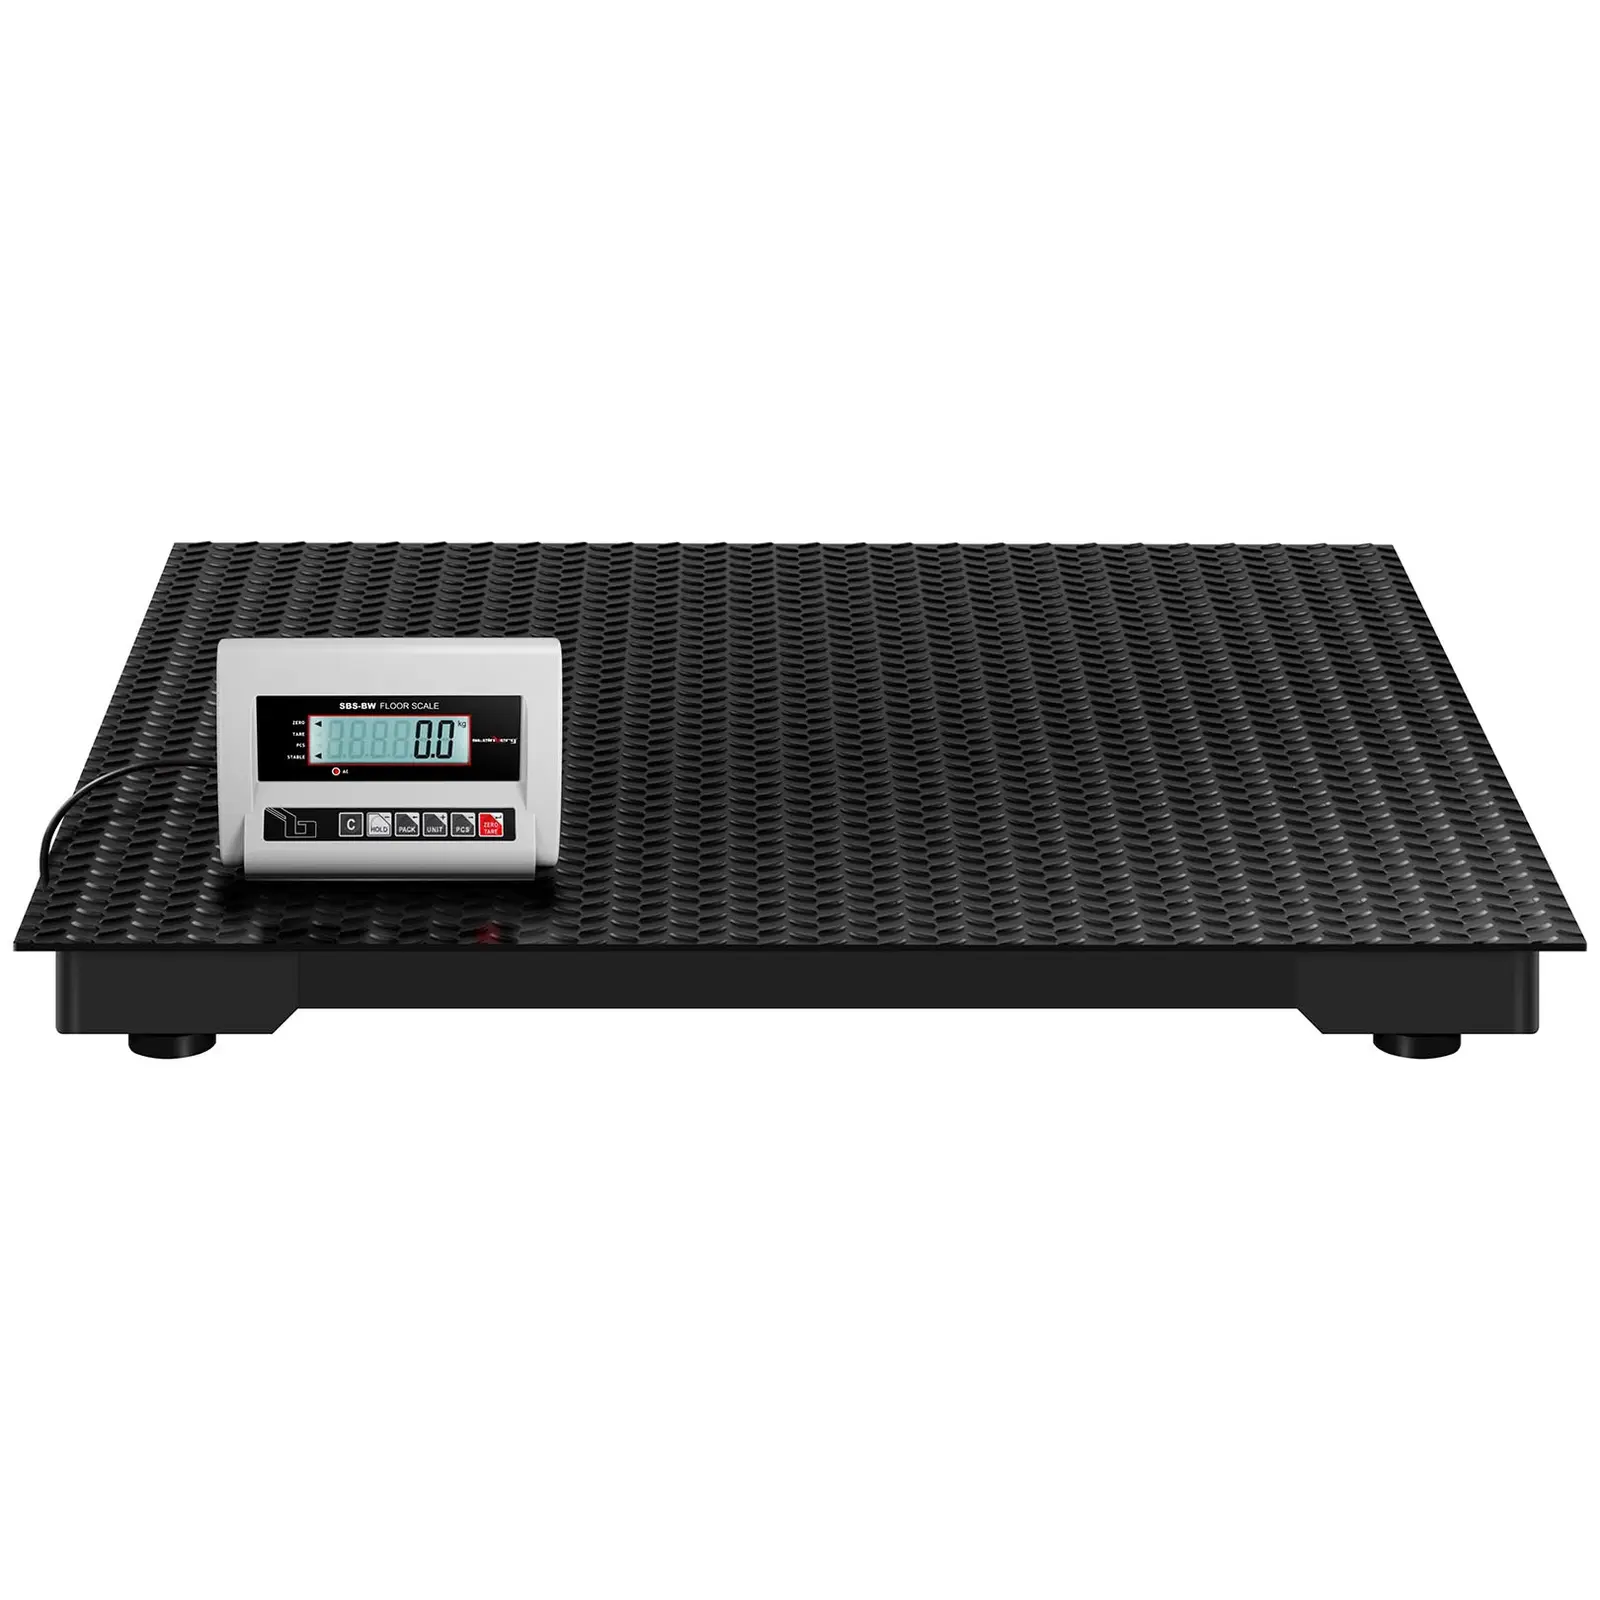 Podlahová váha s rampou - sada - 1 000 kg / 0,5 kg - LCD - baterie 10 h 